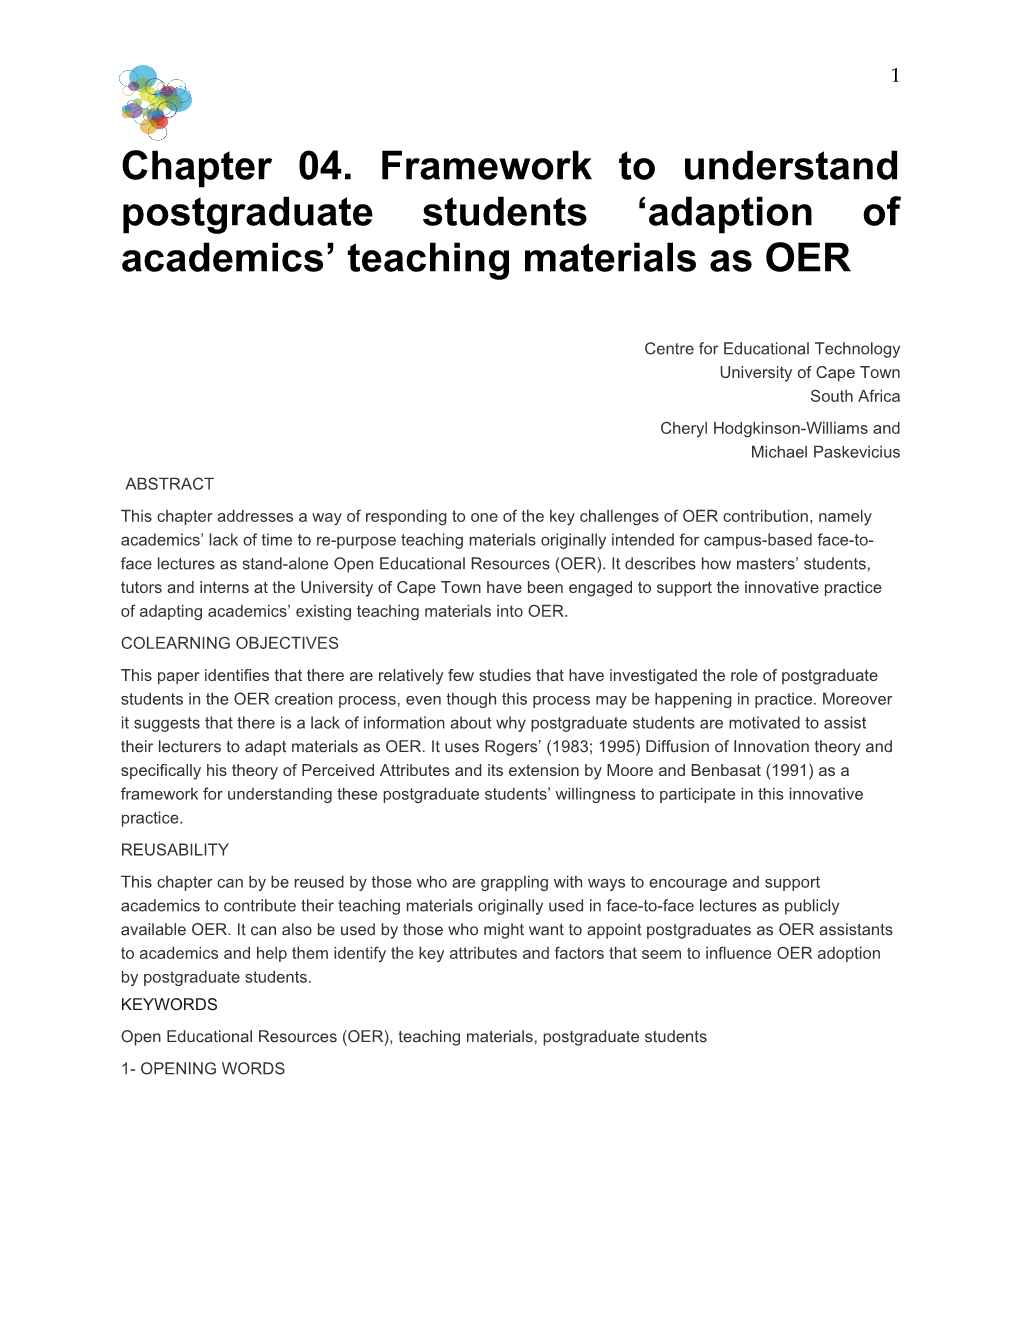 Chapter 04. Framework to Understand Postgraduate Students Adaption of Academics Teaching